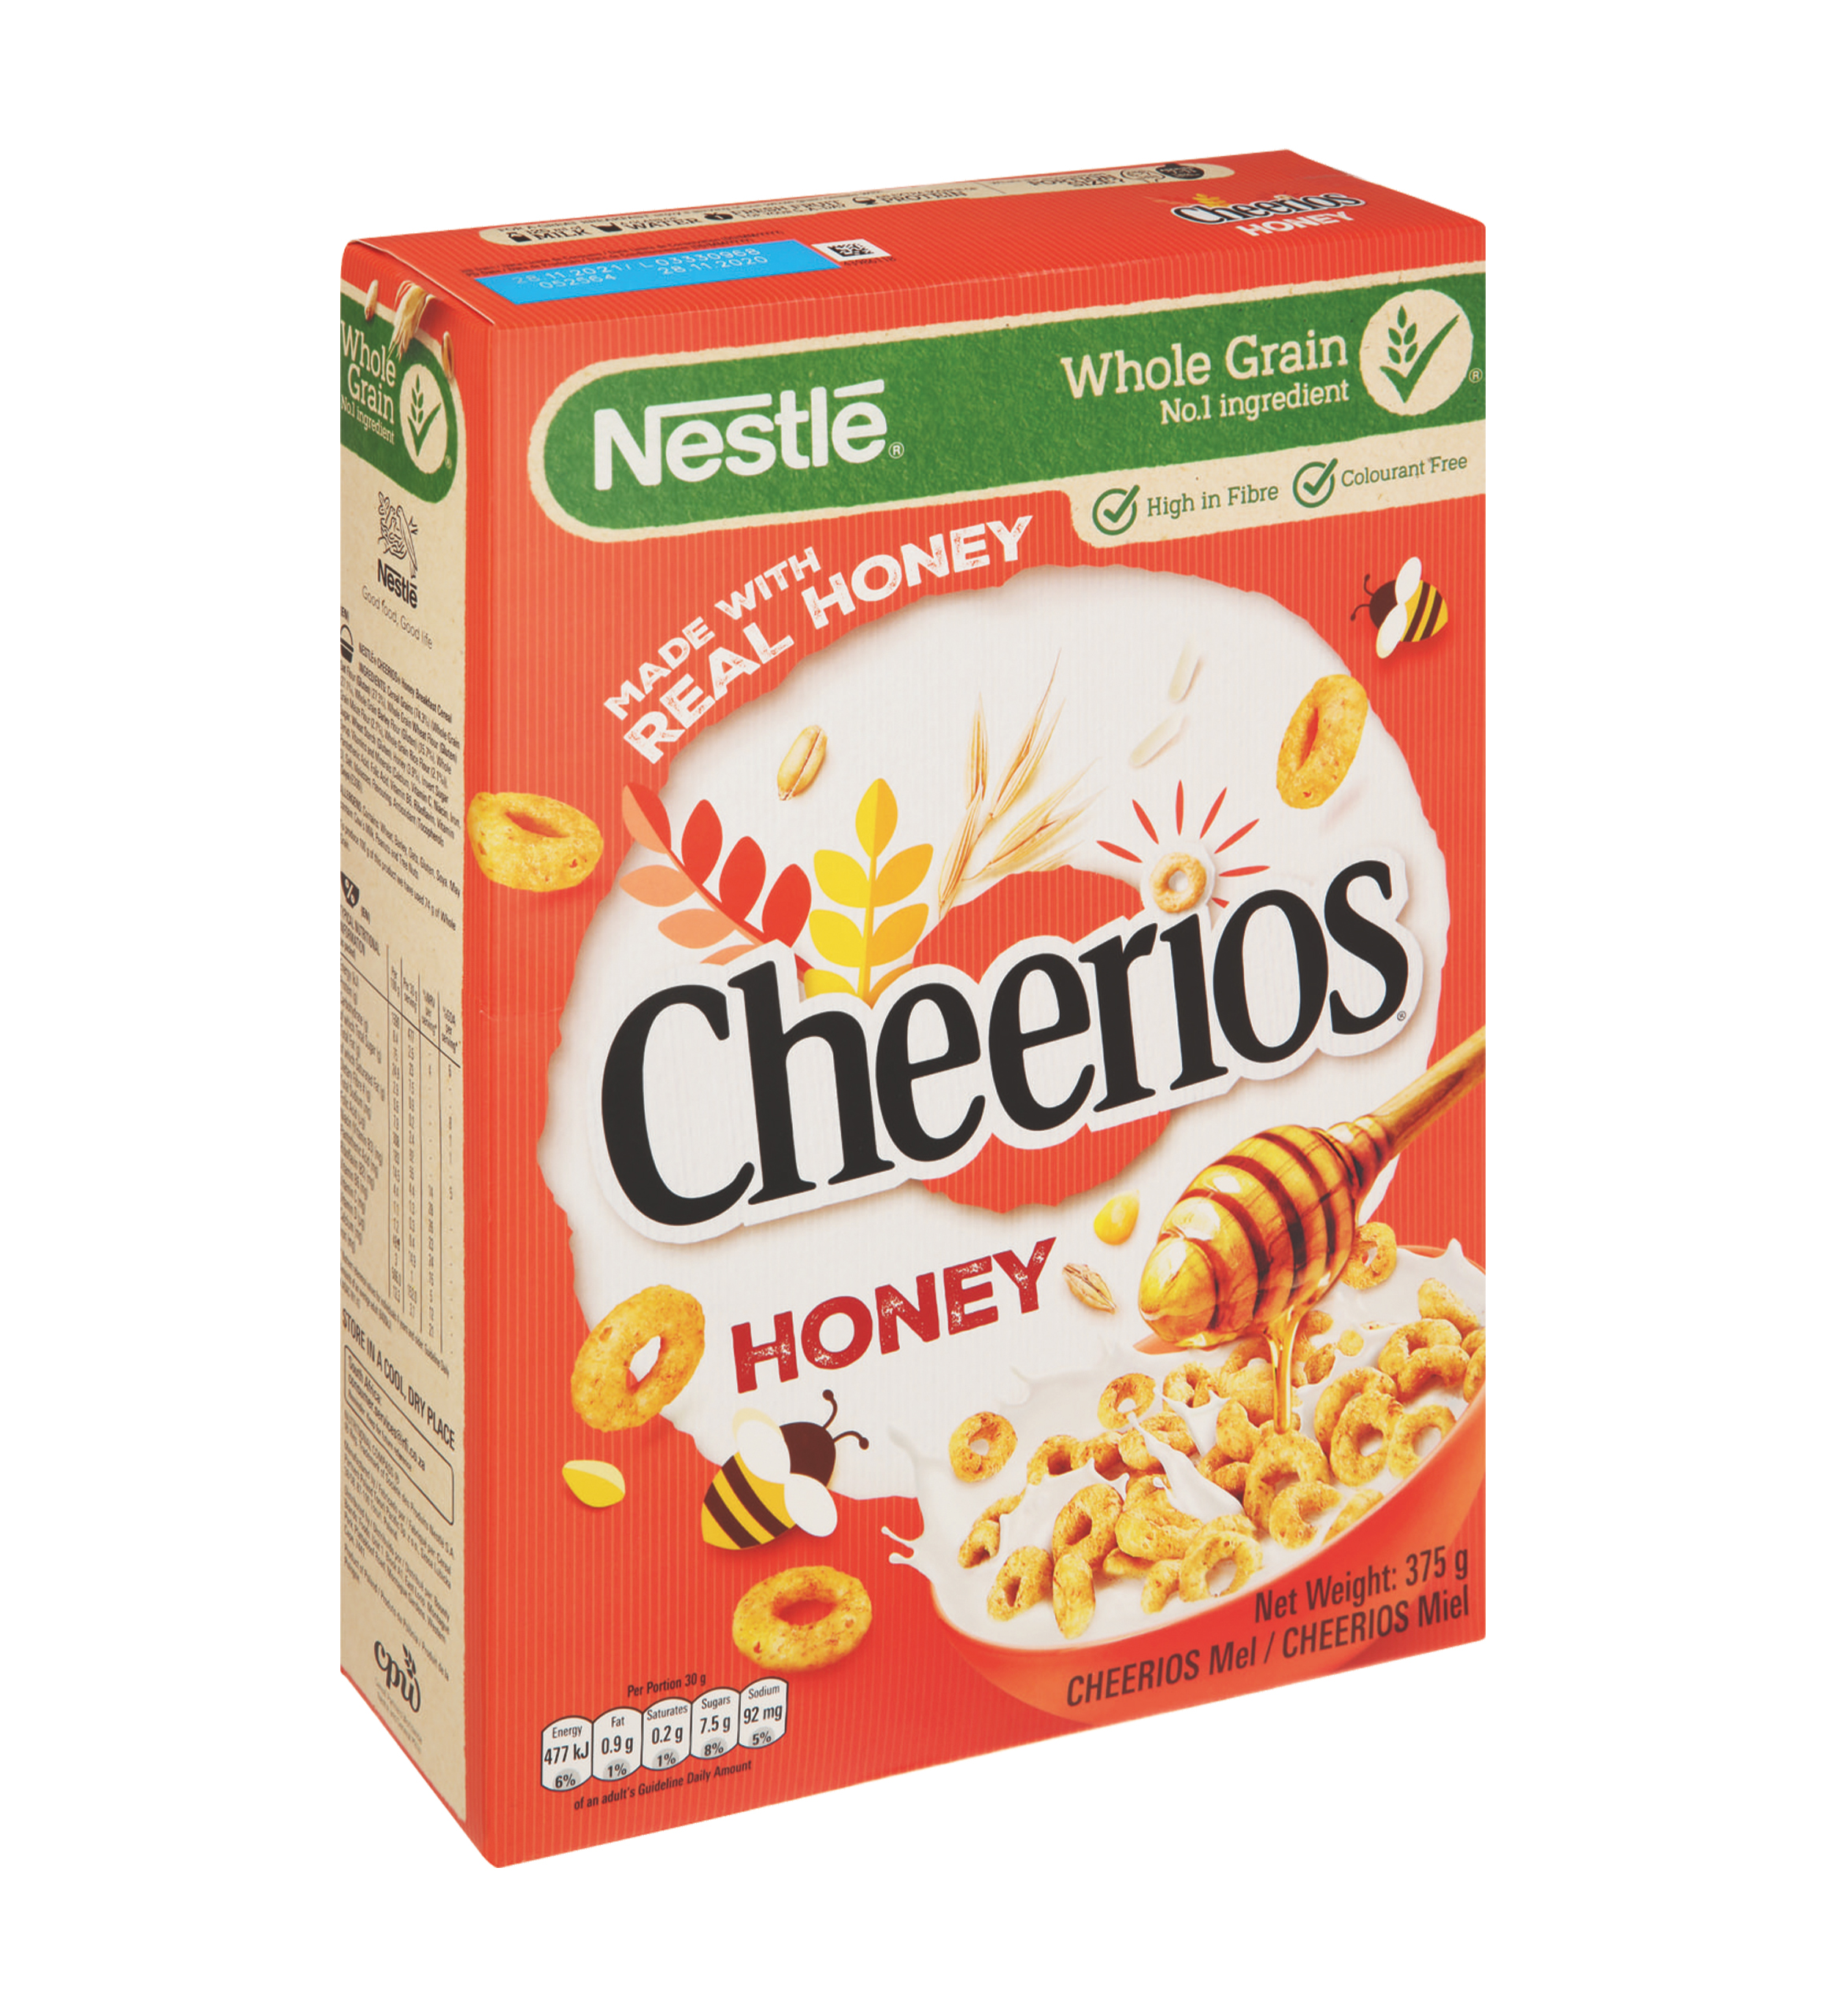 https://bbfc.co.za/wp-content/uploads/2022/02/Cheerios-Cereal-Box-375g-resized.jpg